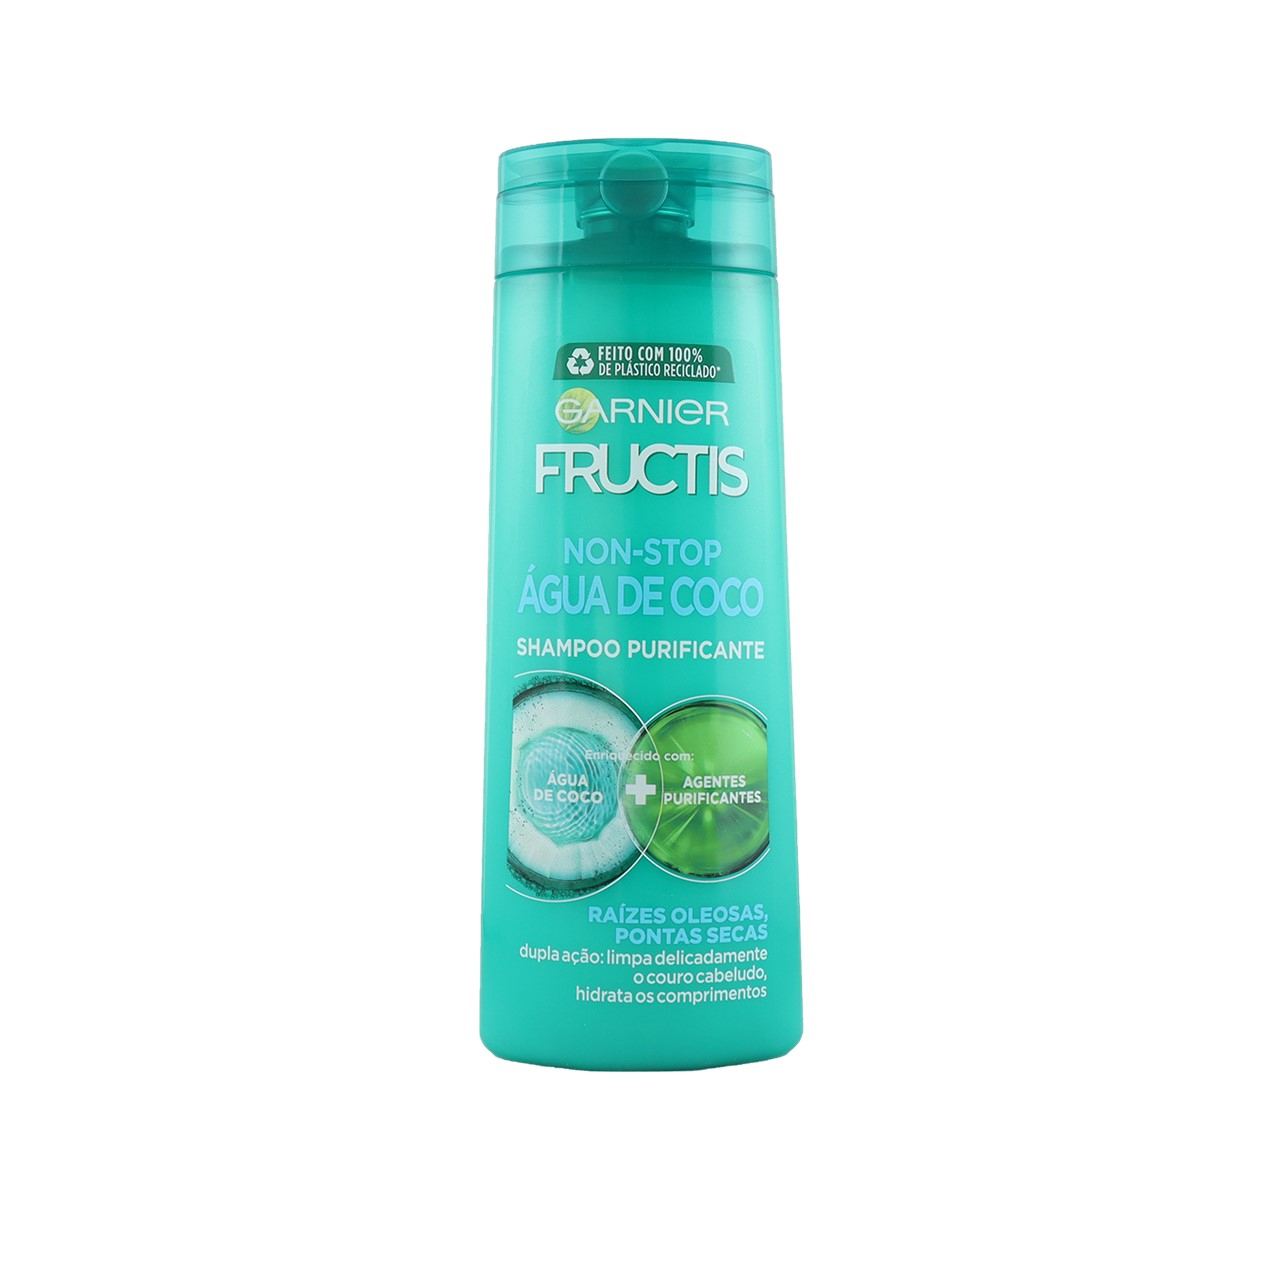 Buy Garnier Fructis Pure Non Purifying oz) Stop Shampoo Water (13.53fl · Coconut 400ml USA